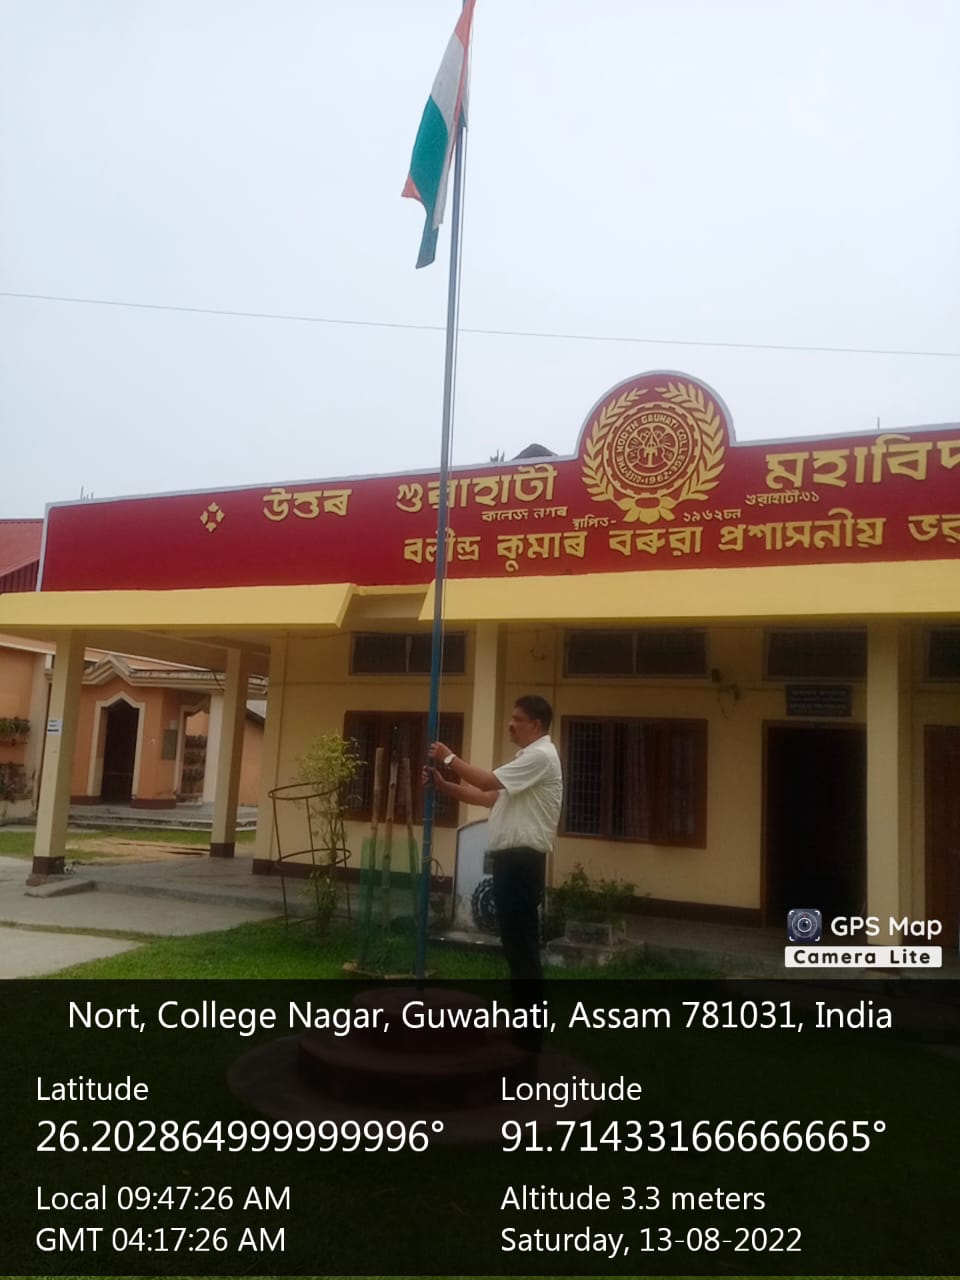 North Gauhati College Gallery